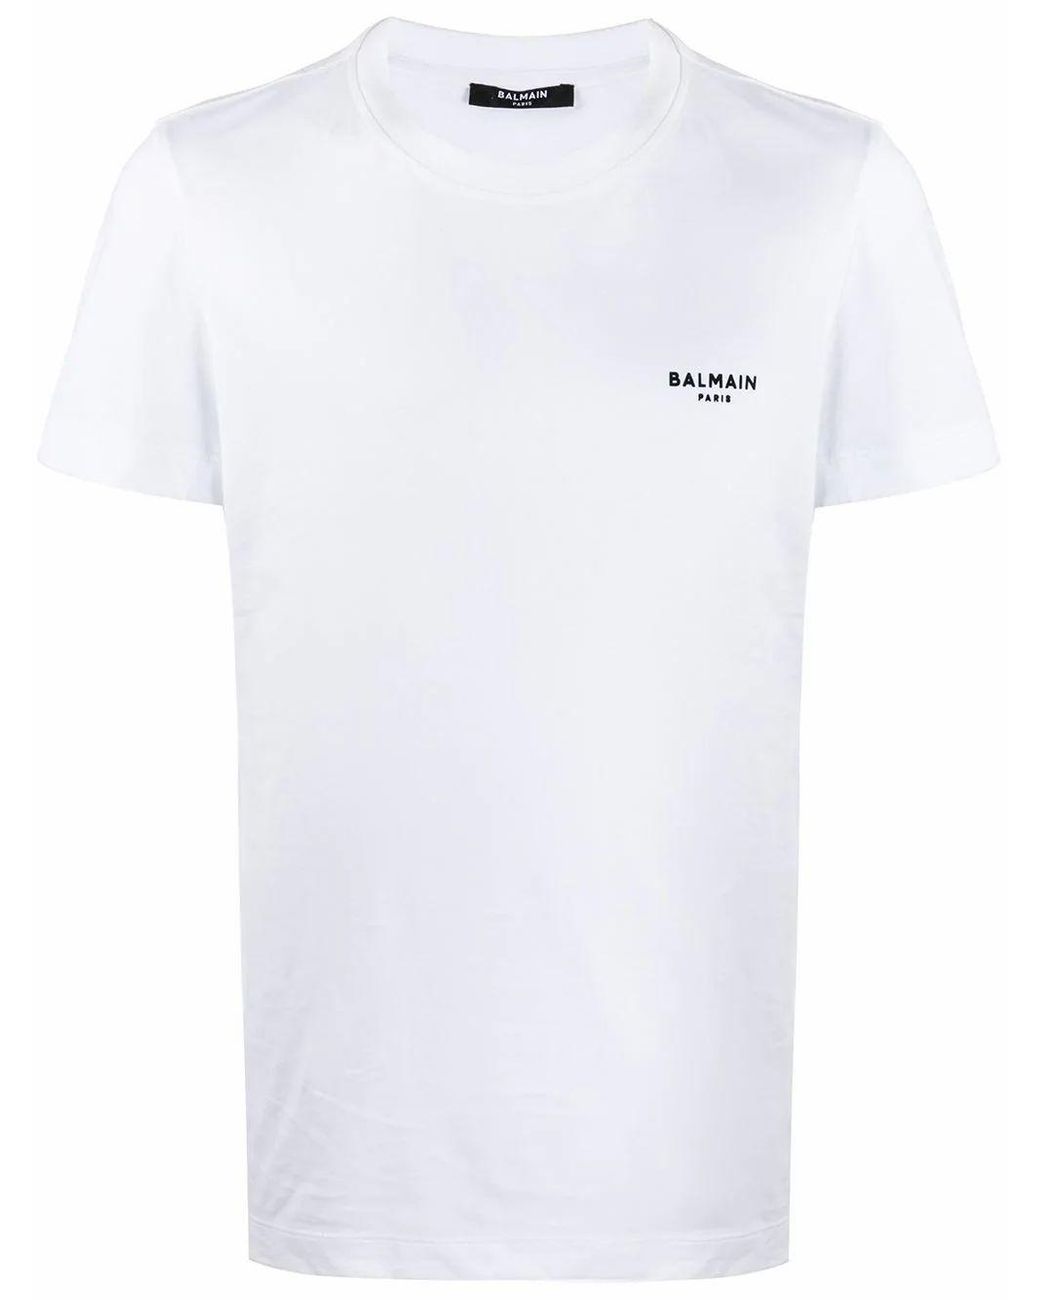 Balmain Cotton T-shirt in White for Men - Lyst